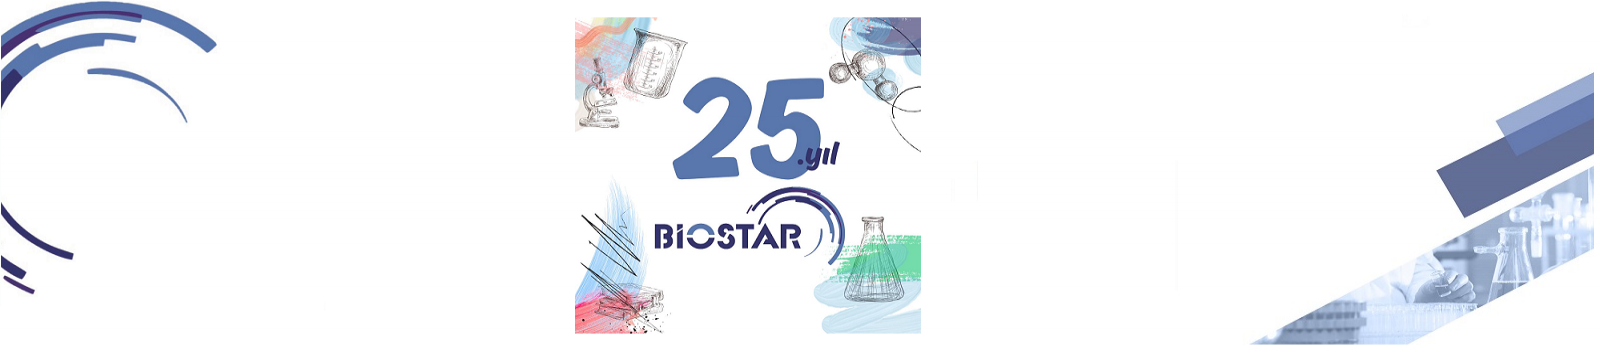 Biostar 25 yaşında